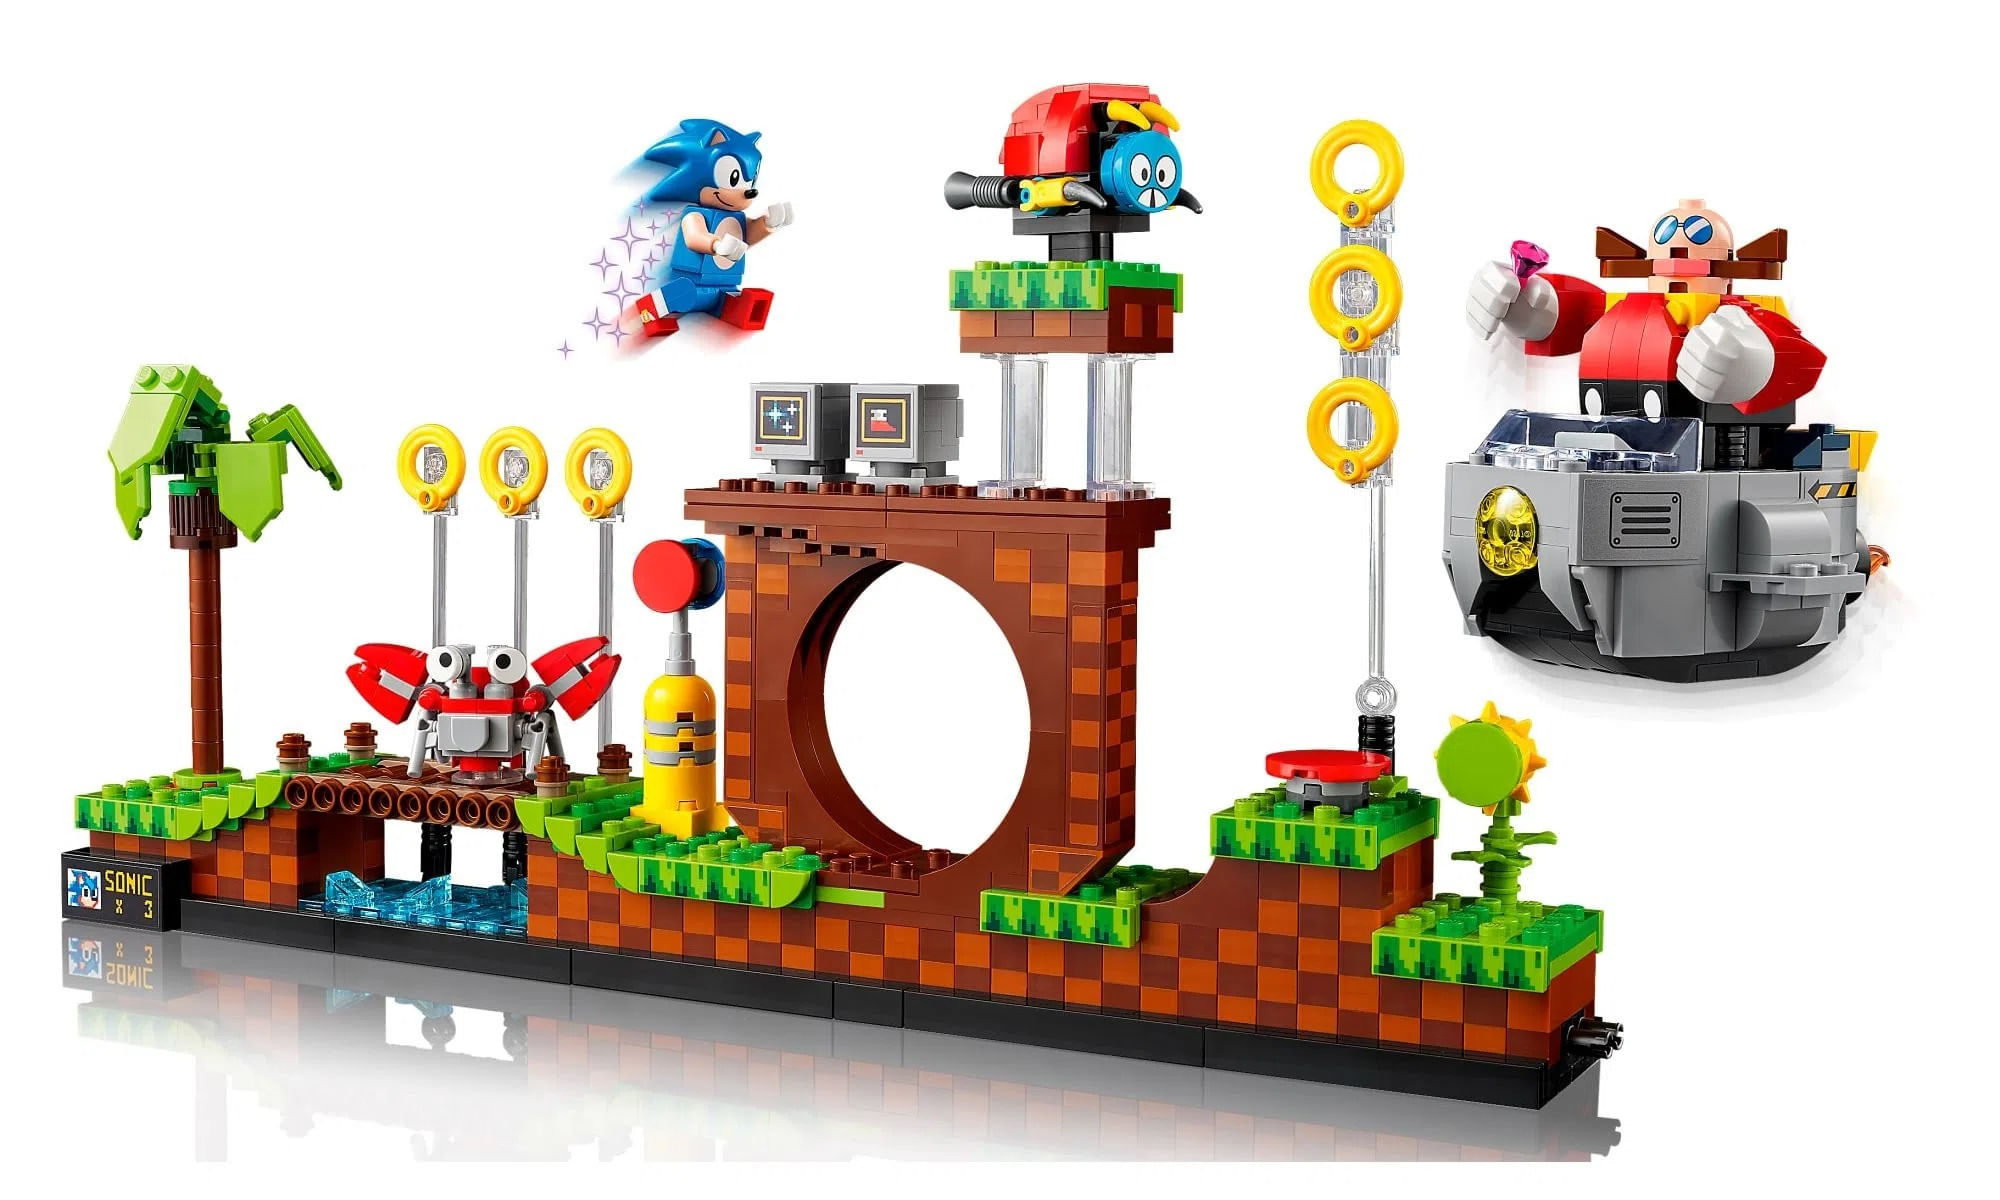 Lego Sonic the Hedgehog  Lego projects, Lego creative, Cool lego creations